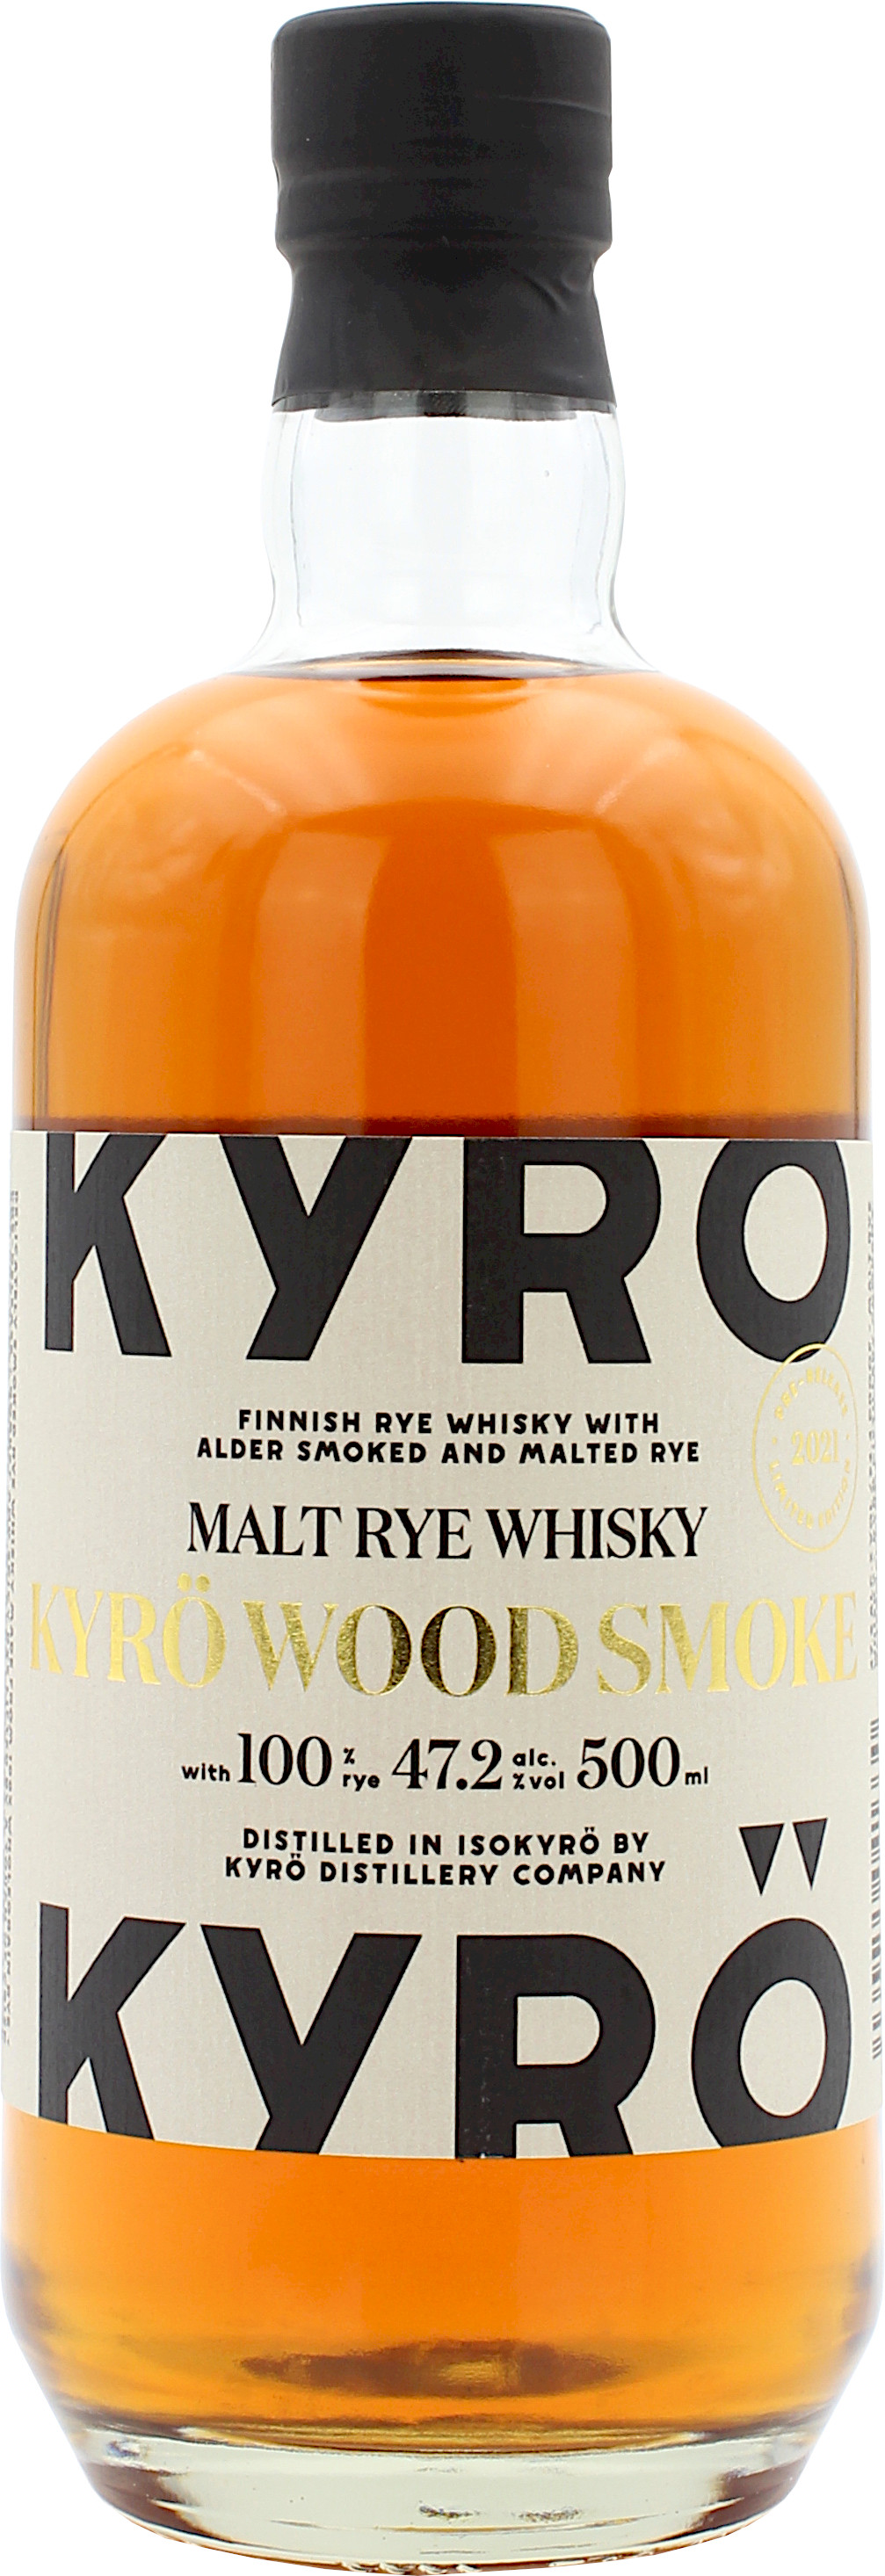 Kyrö Wood Smoke Rye Whisky 0,5